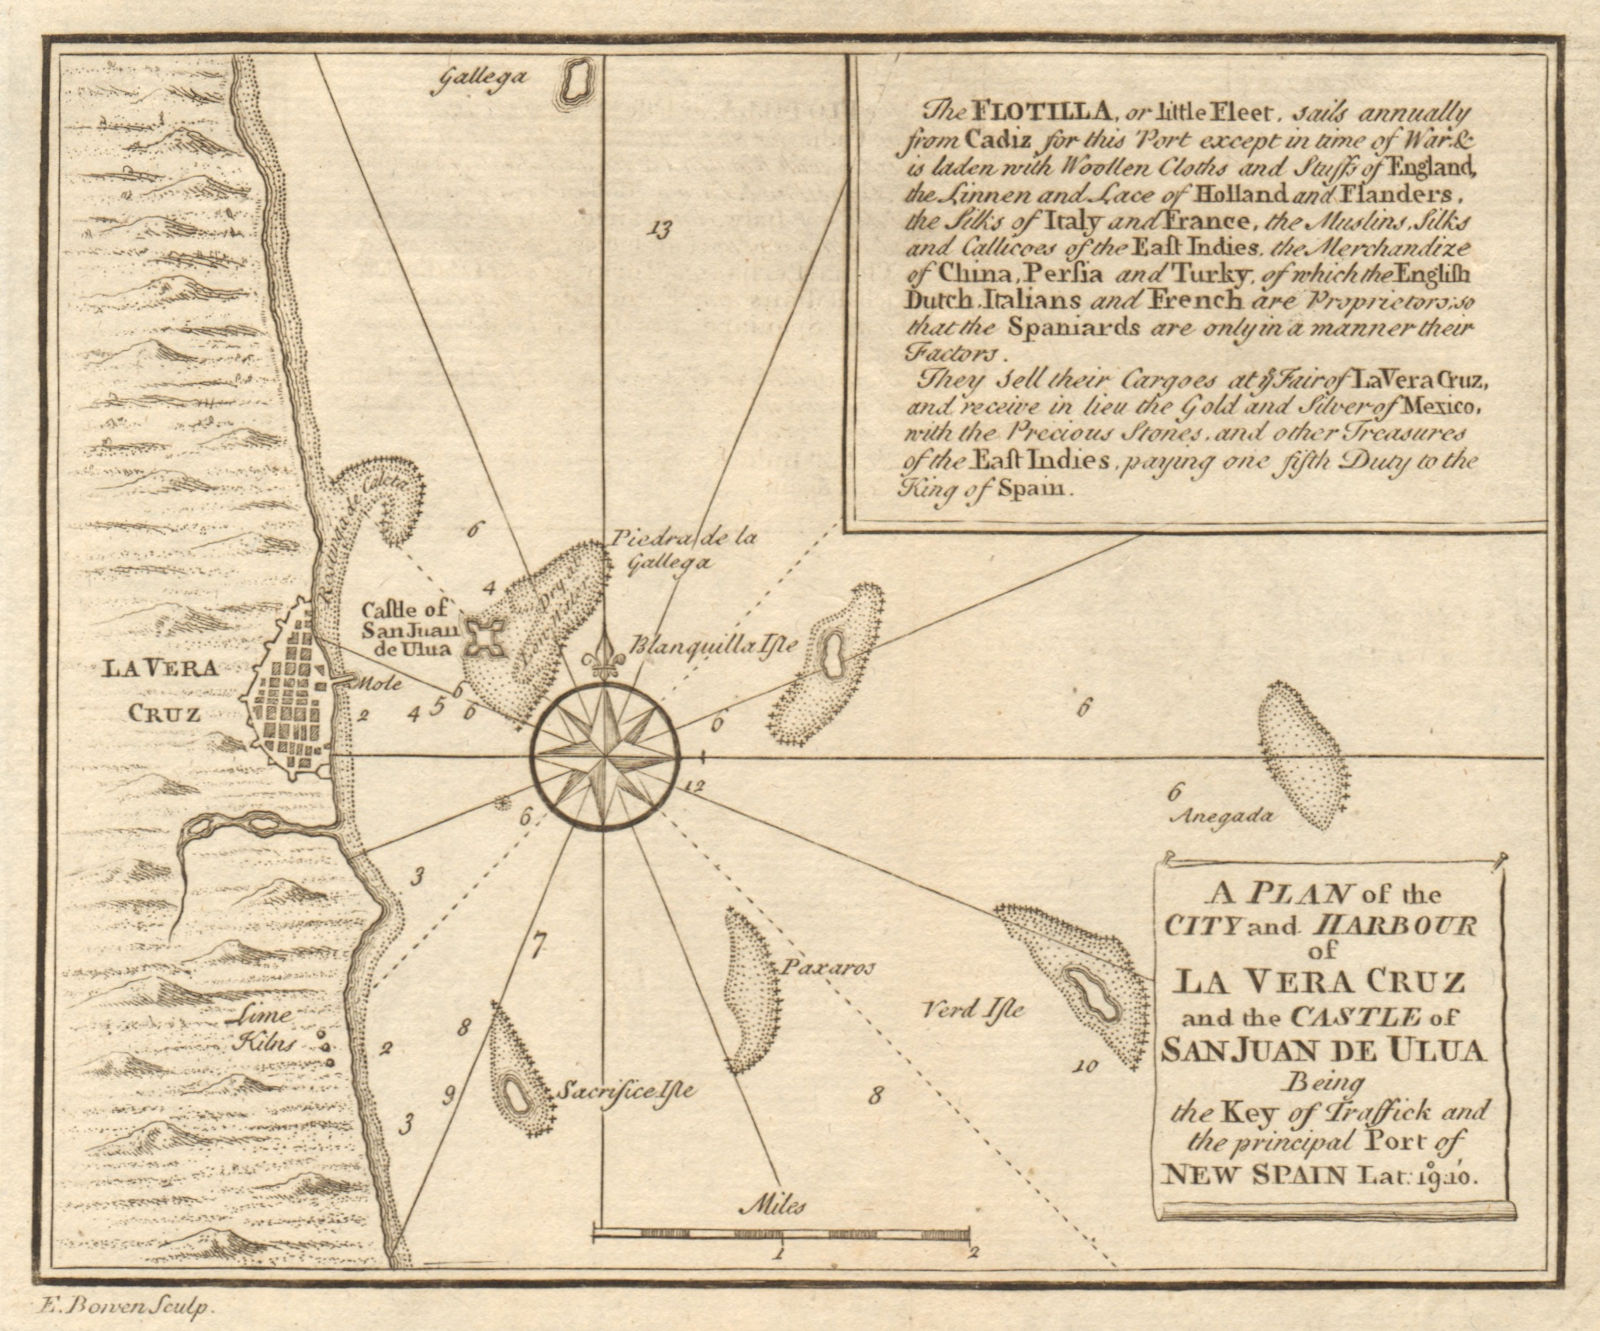 City & harbour of La Veracruz & San Juan de Ulua. Mexico. E. BOWEN 1740 map